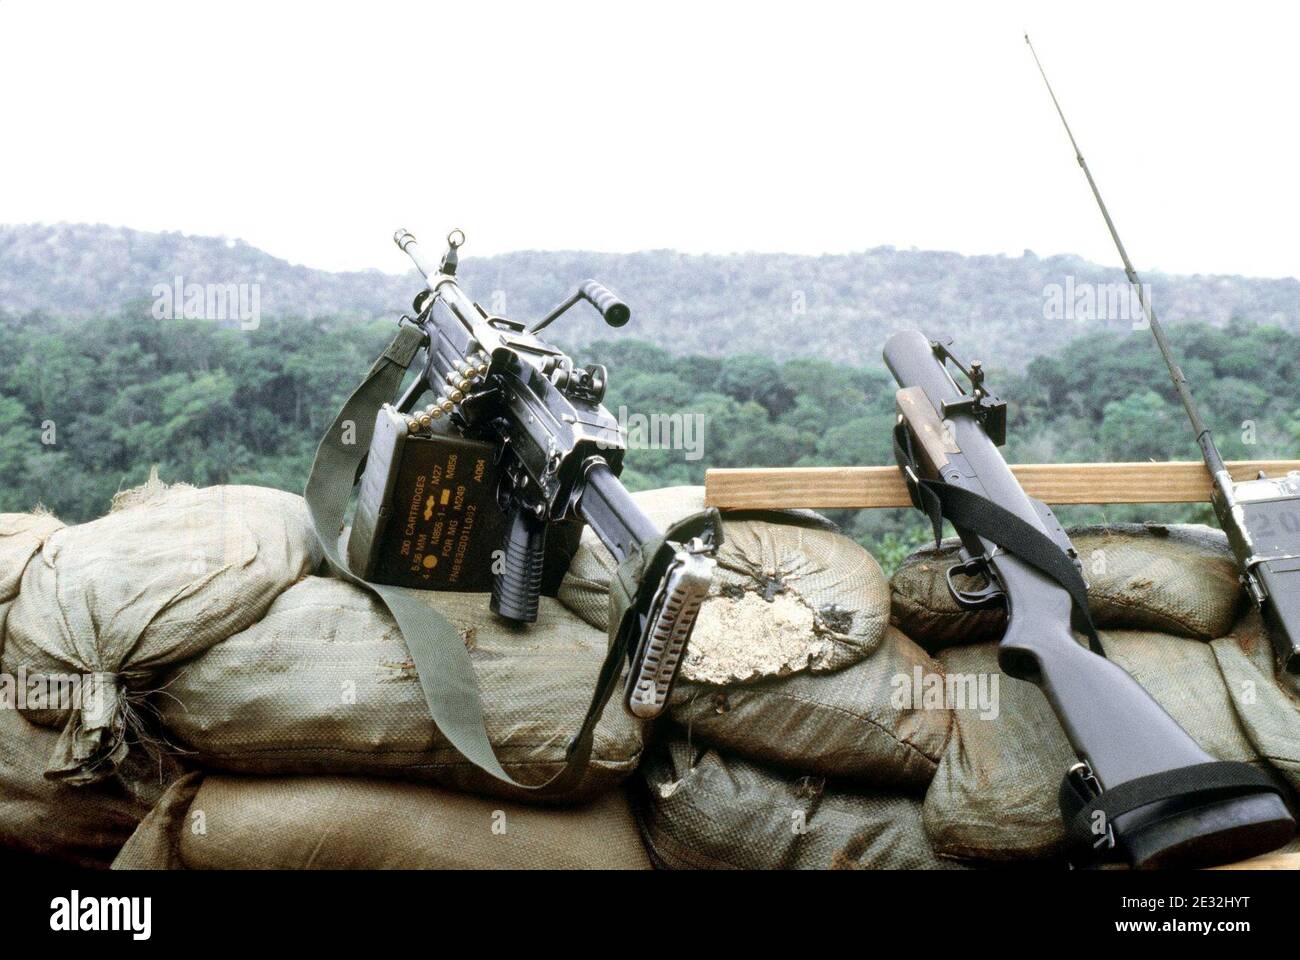 M249 FN MINIMI DM-ST-90-02821. Stock Photo